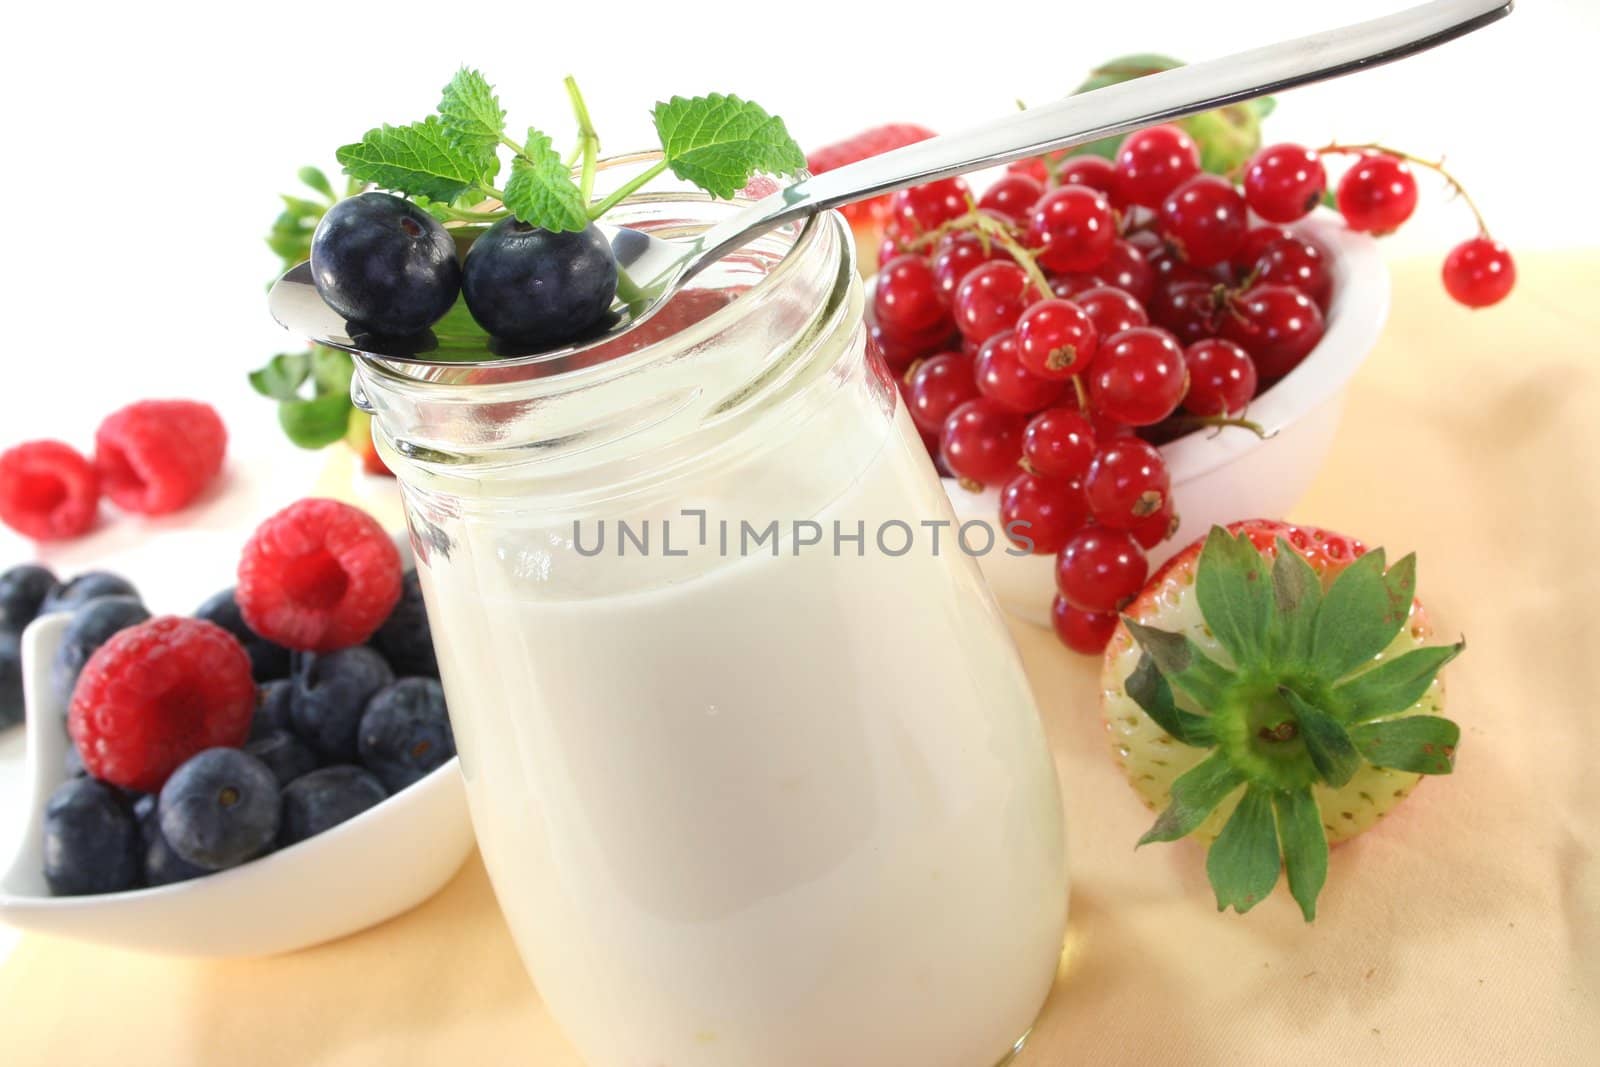 Fruit yoghurt with different varieties of berries